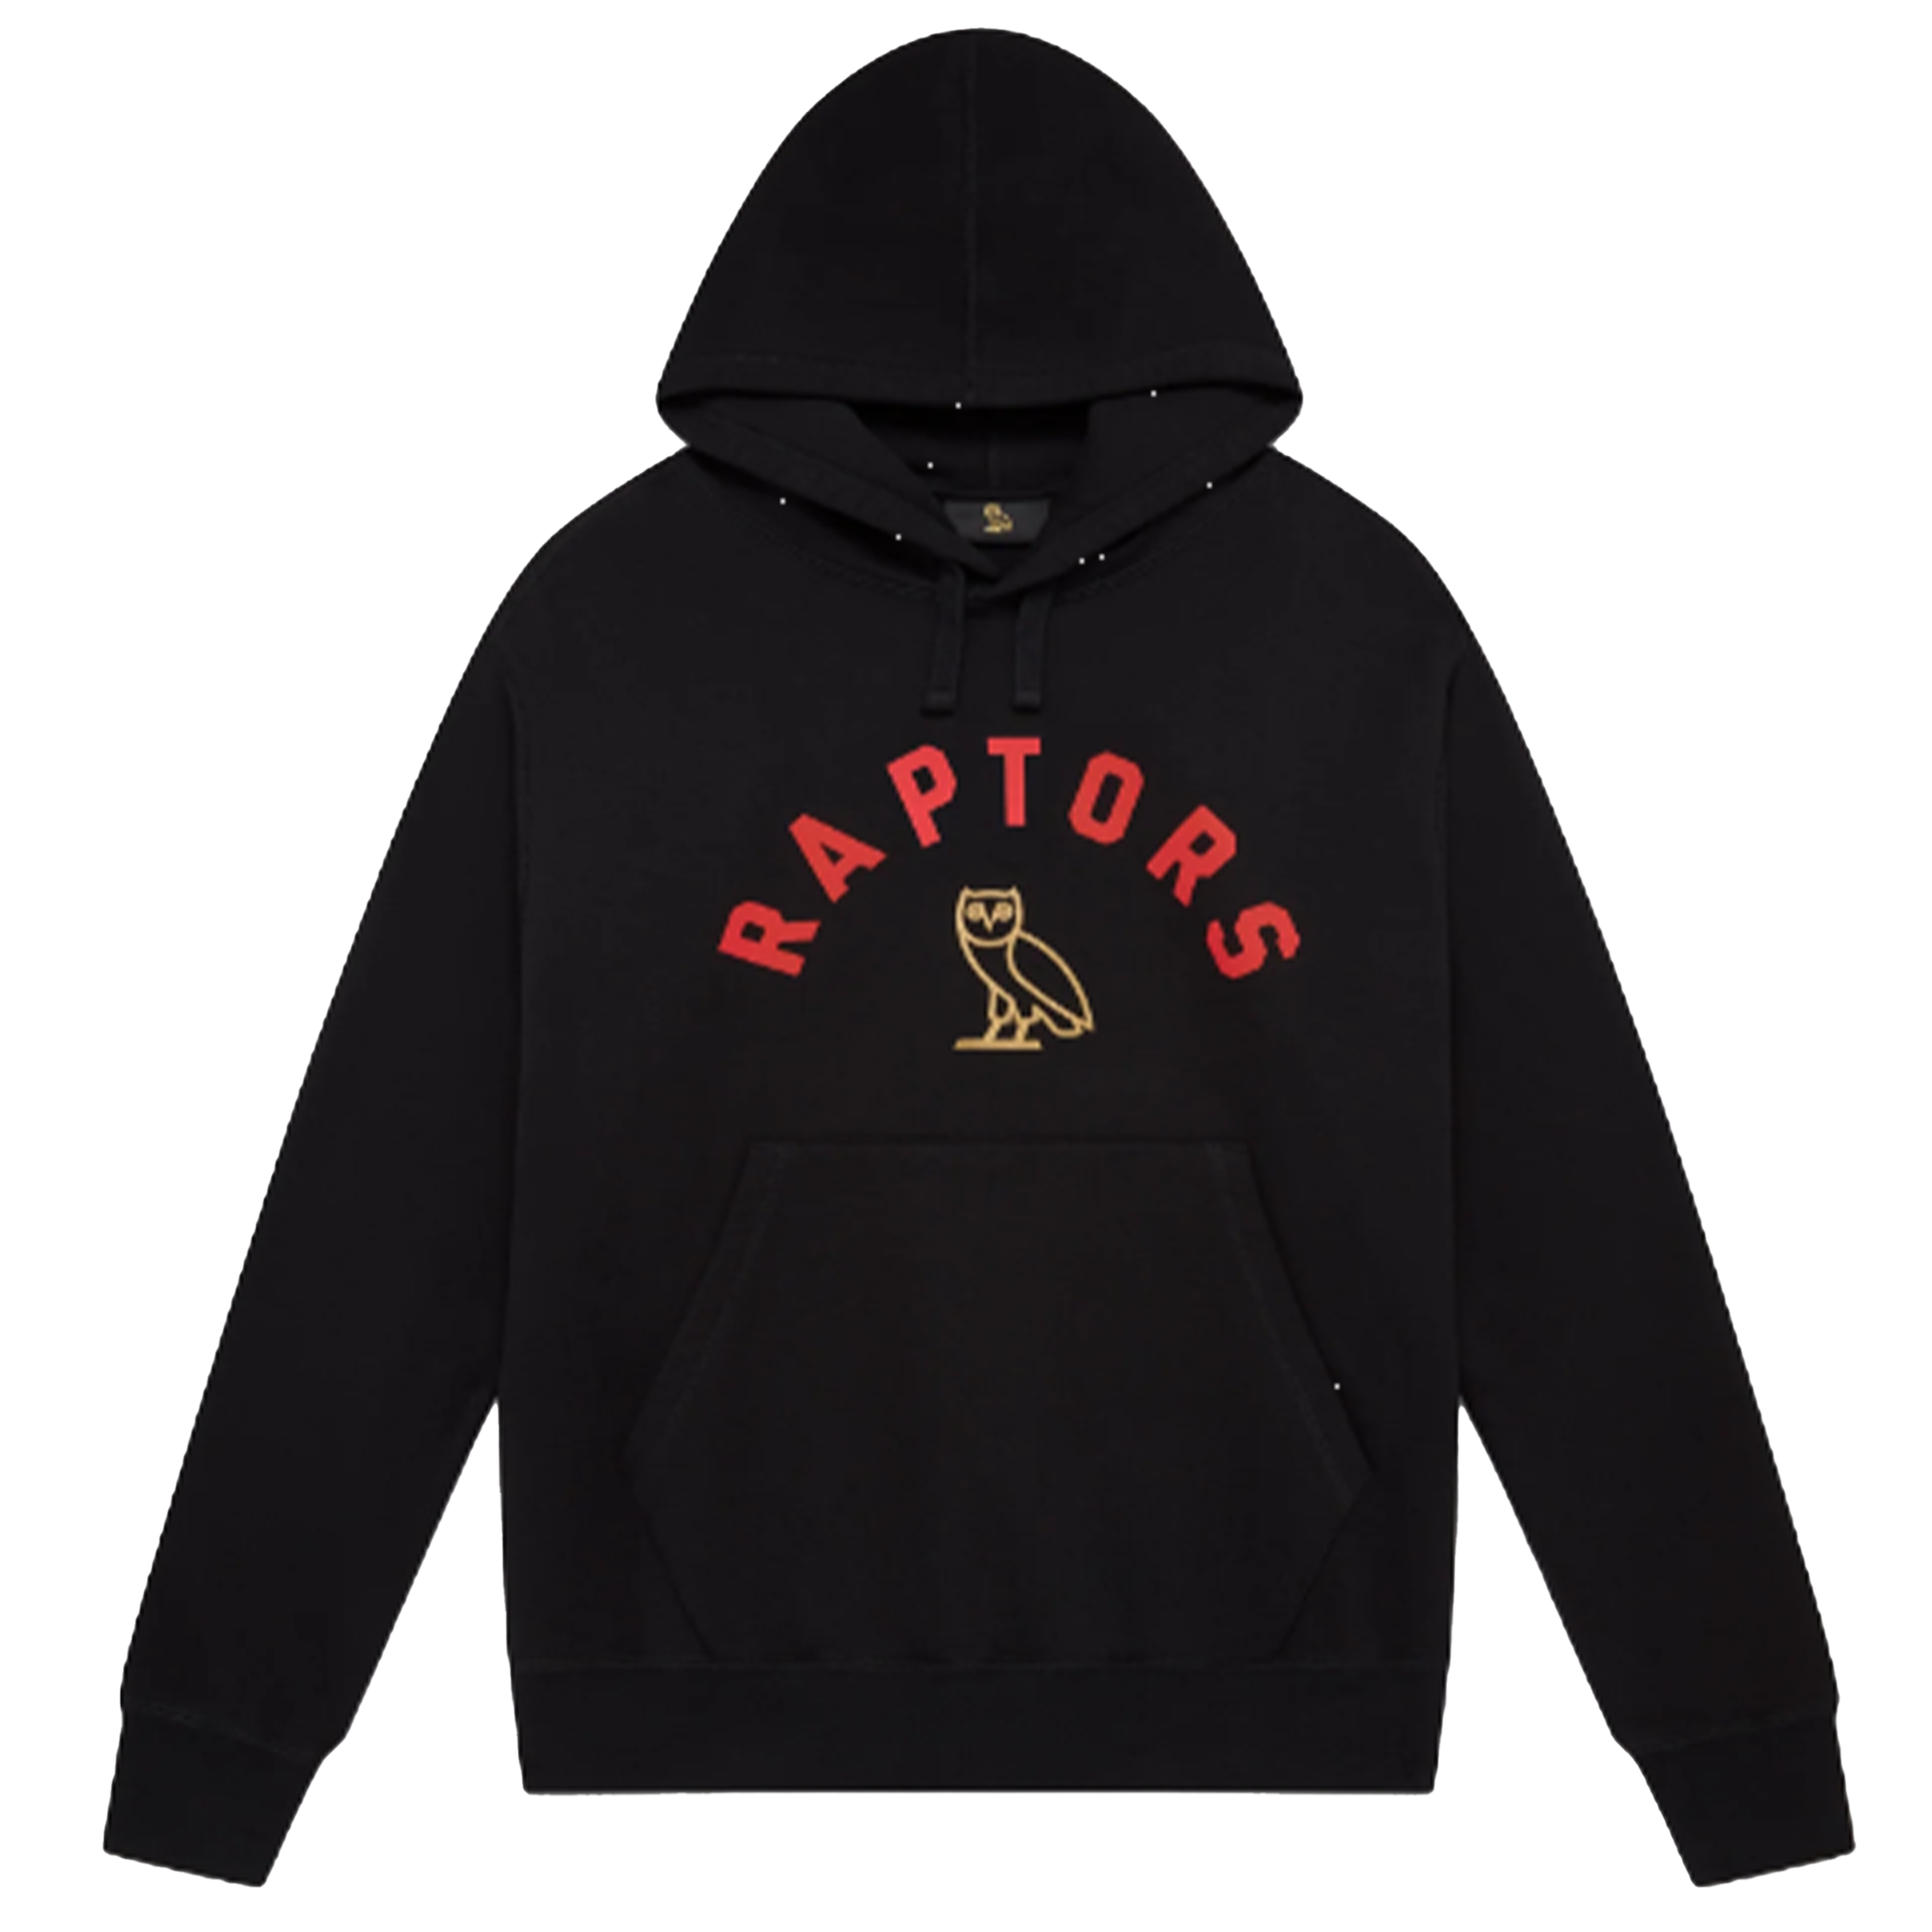 OVO x Raptors "Pre Game" Hooded Sweatshirt